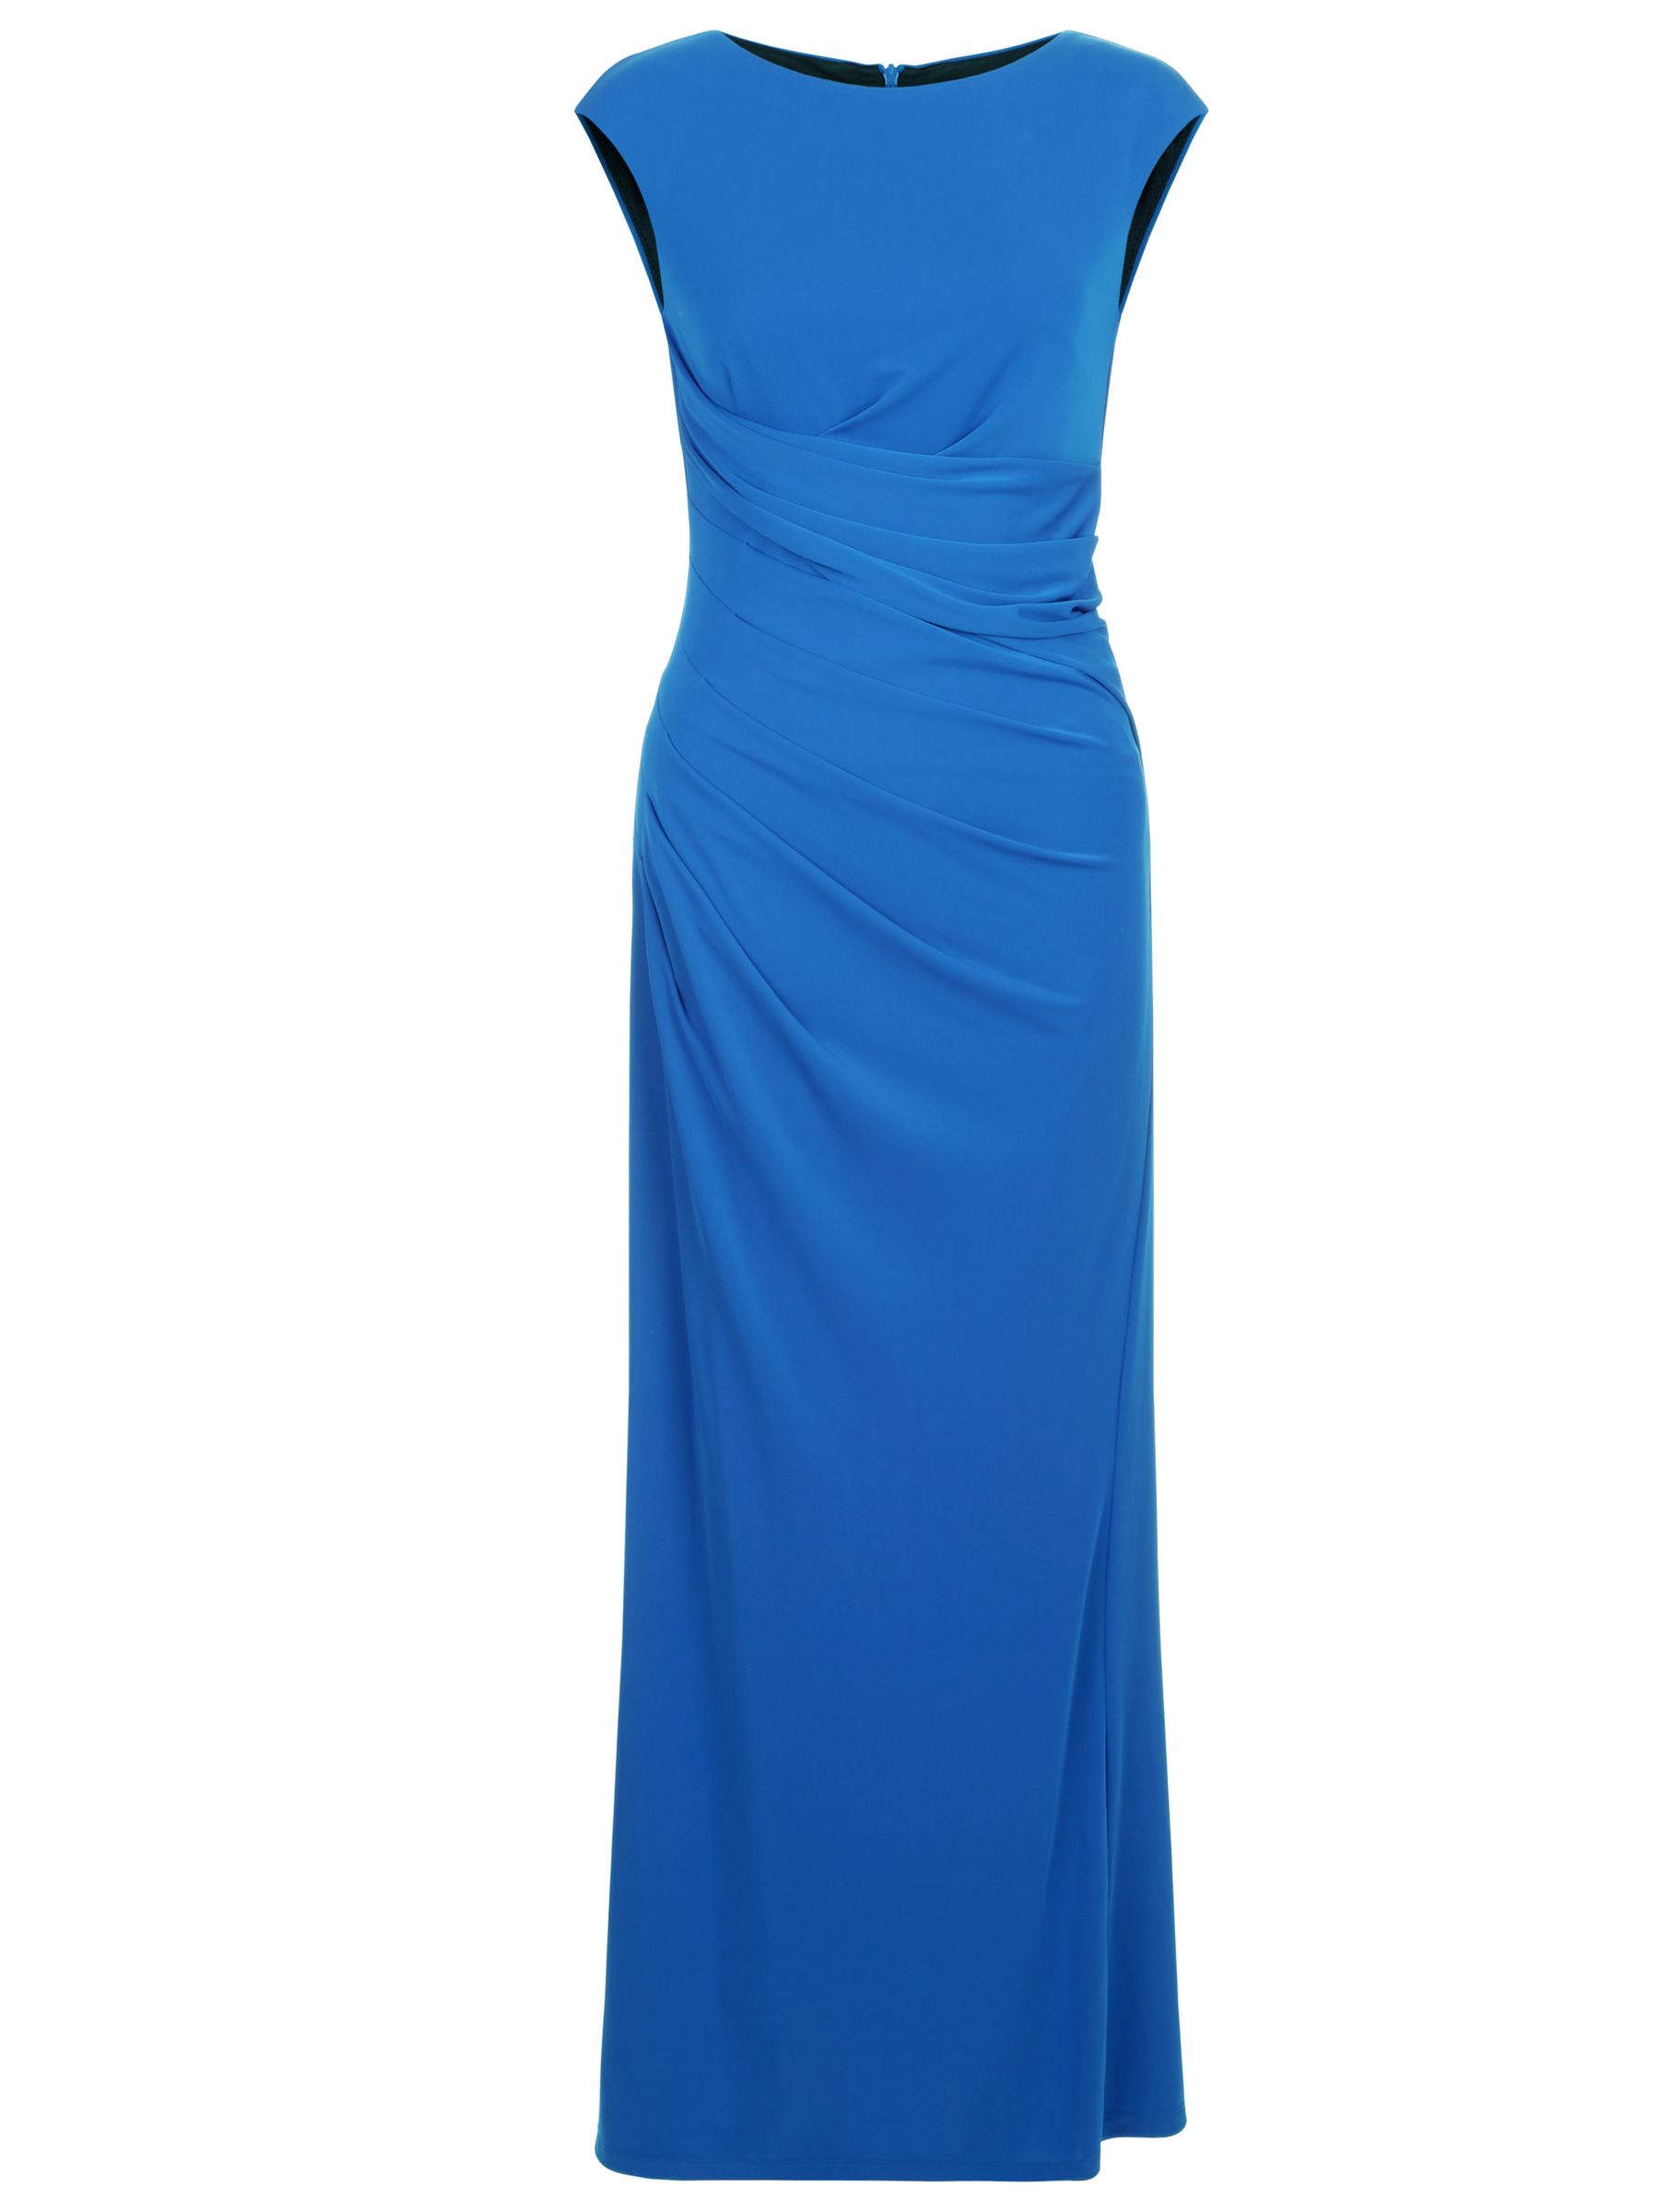 Fenn Wright Manson Petite Cannes Dress, Blue